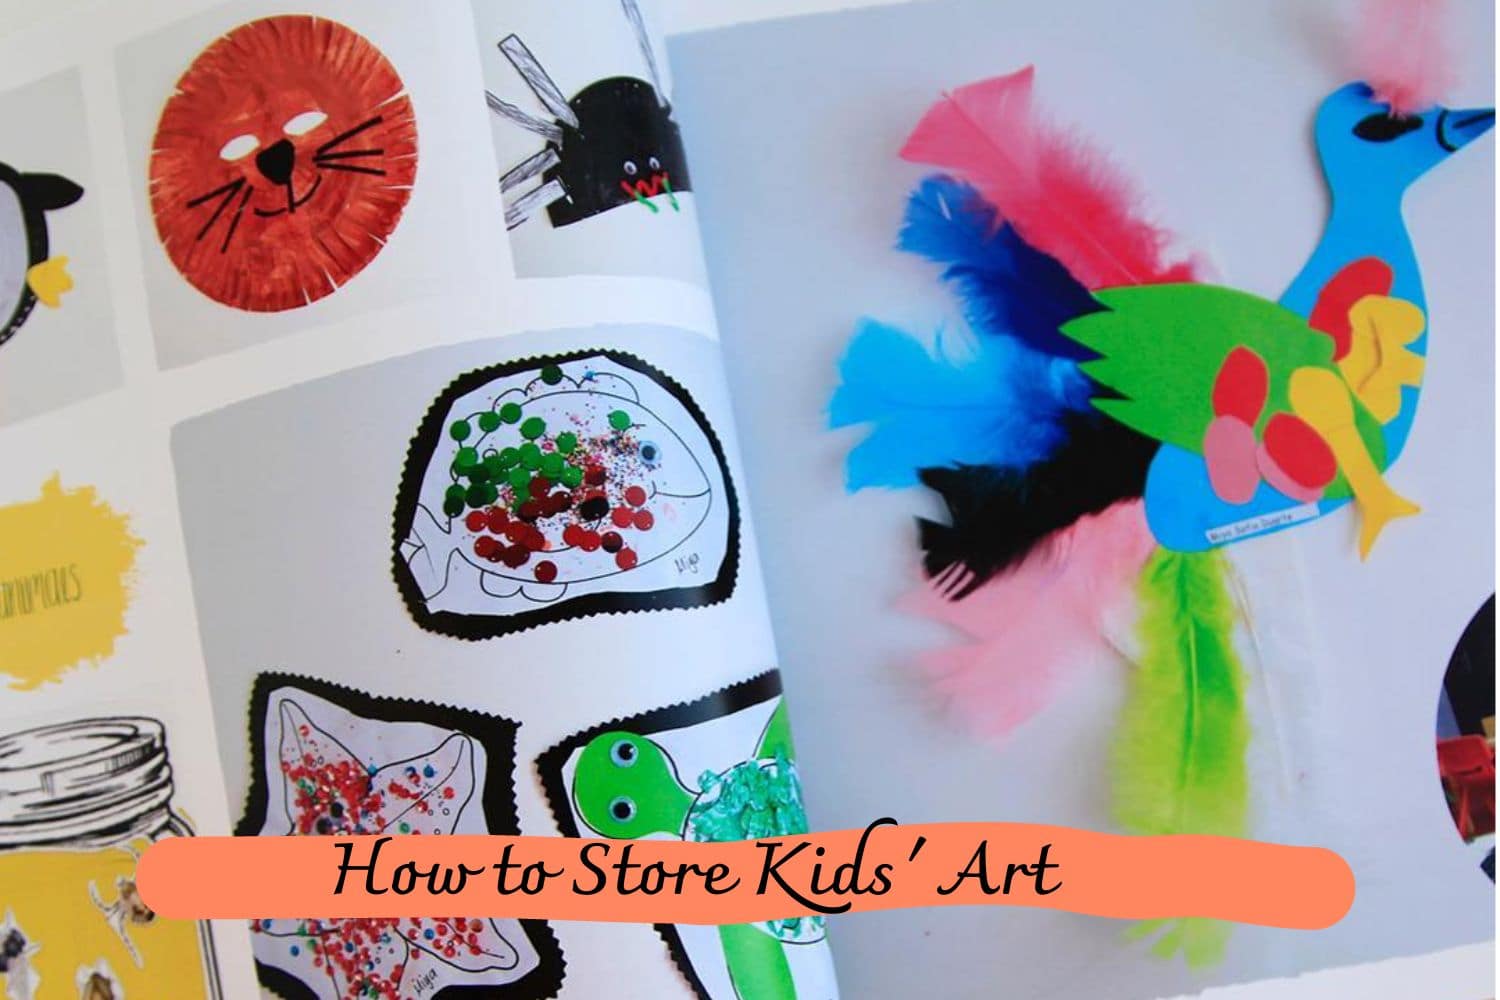 How to Store Kids' Art